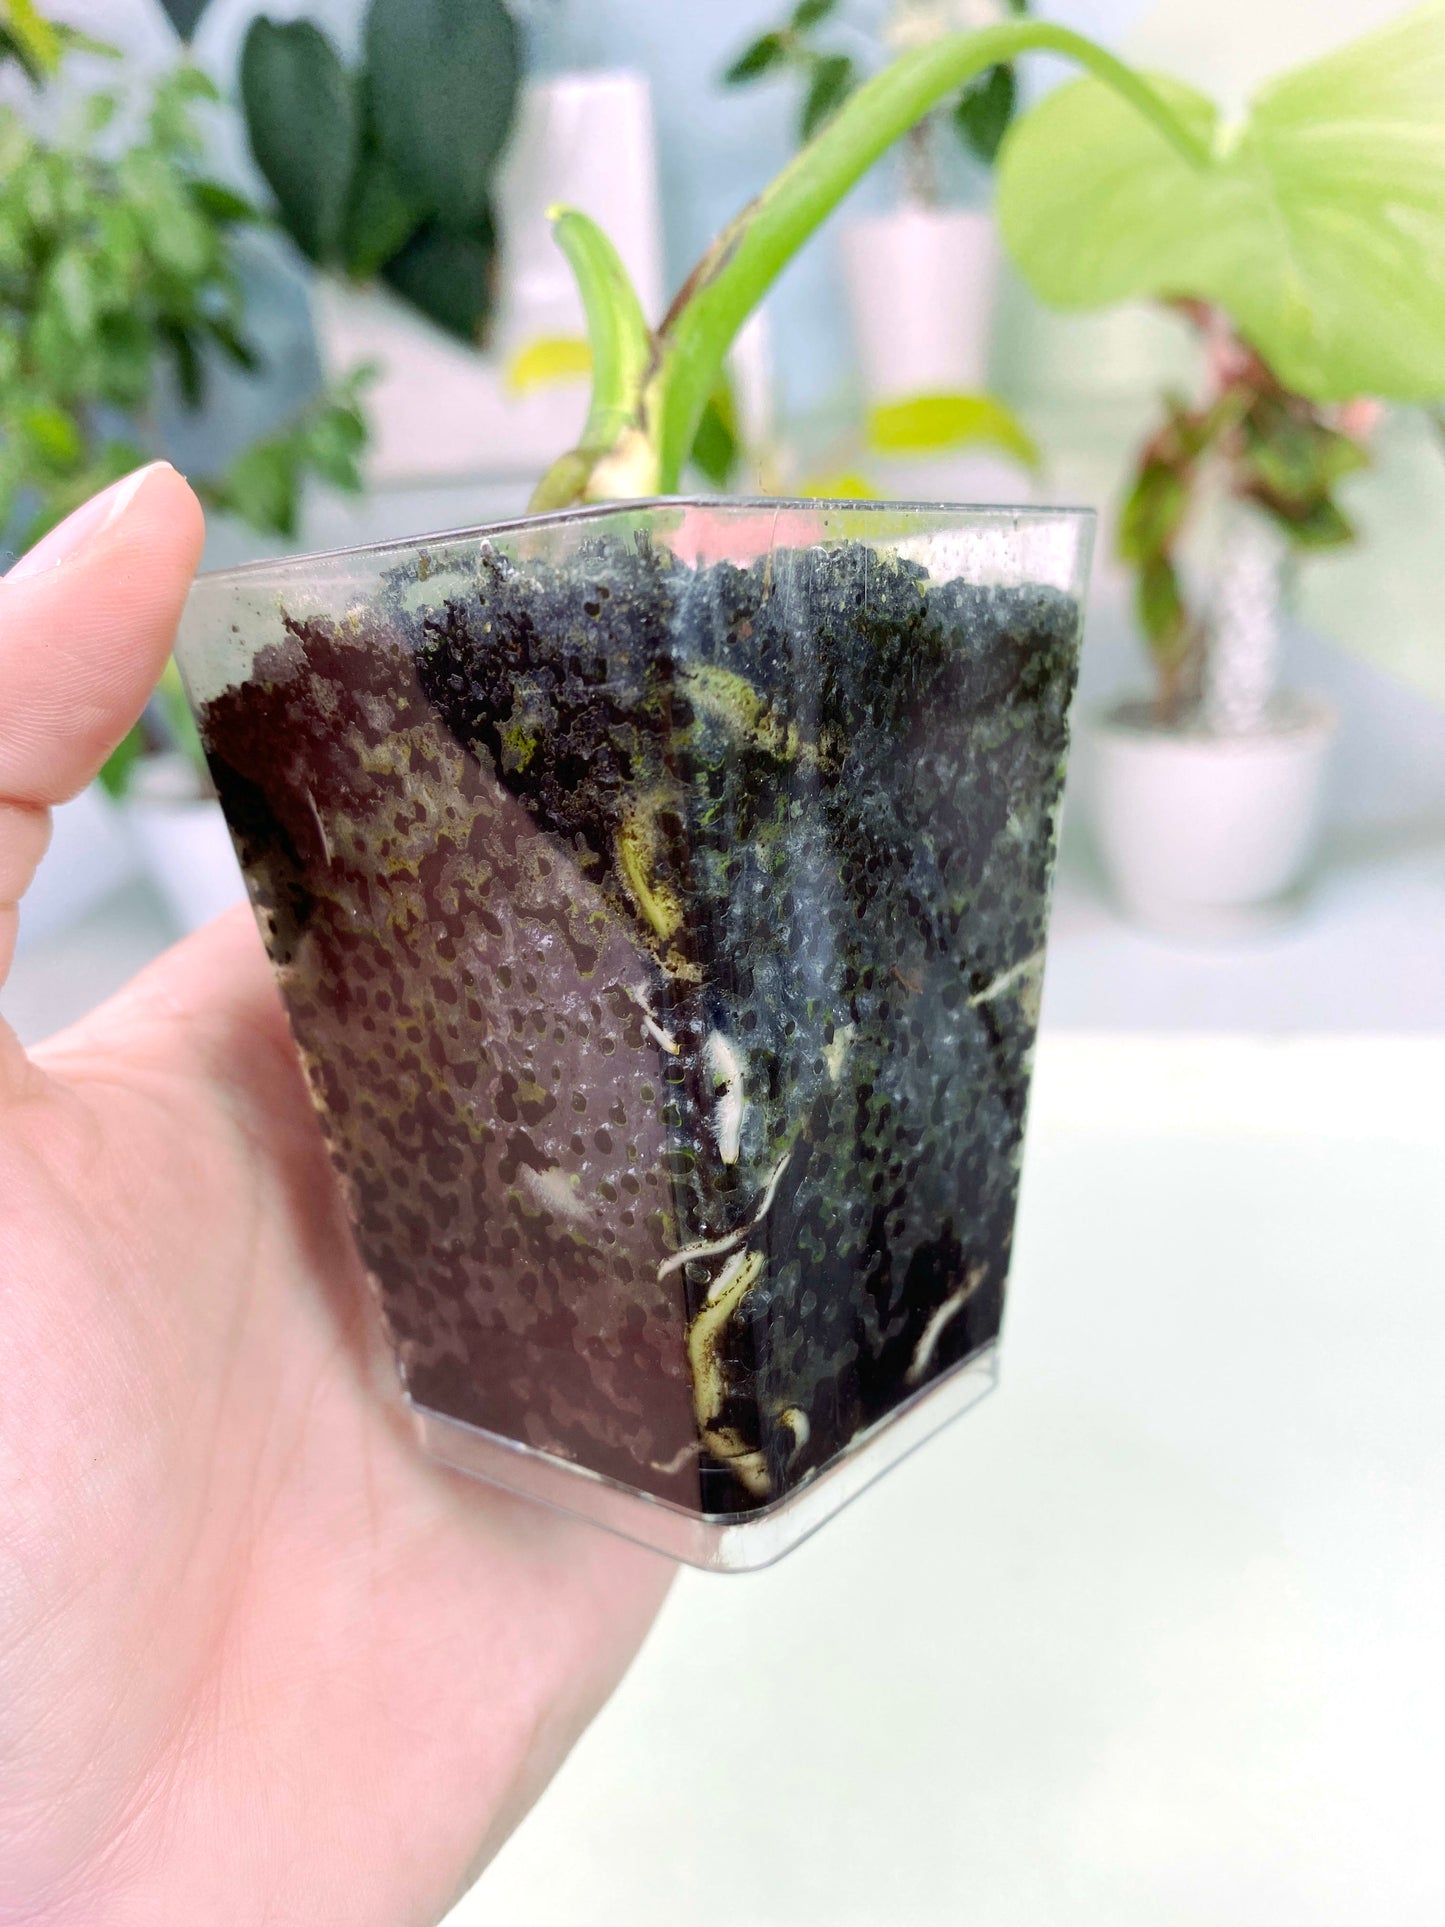 Monstera deliciosa "Aurea Marmorata" variegated Cutting (3:B1) [1437] | Rare Aroid | Exact Plant